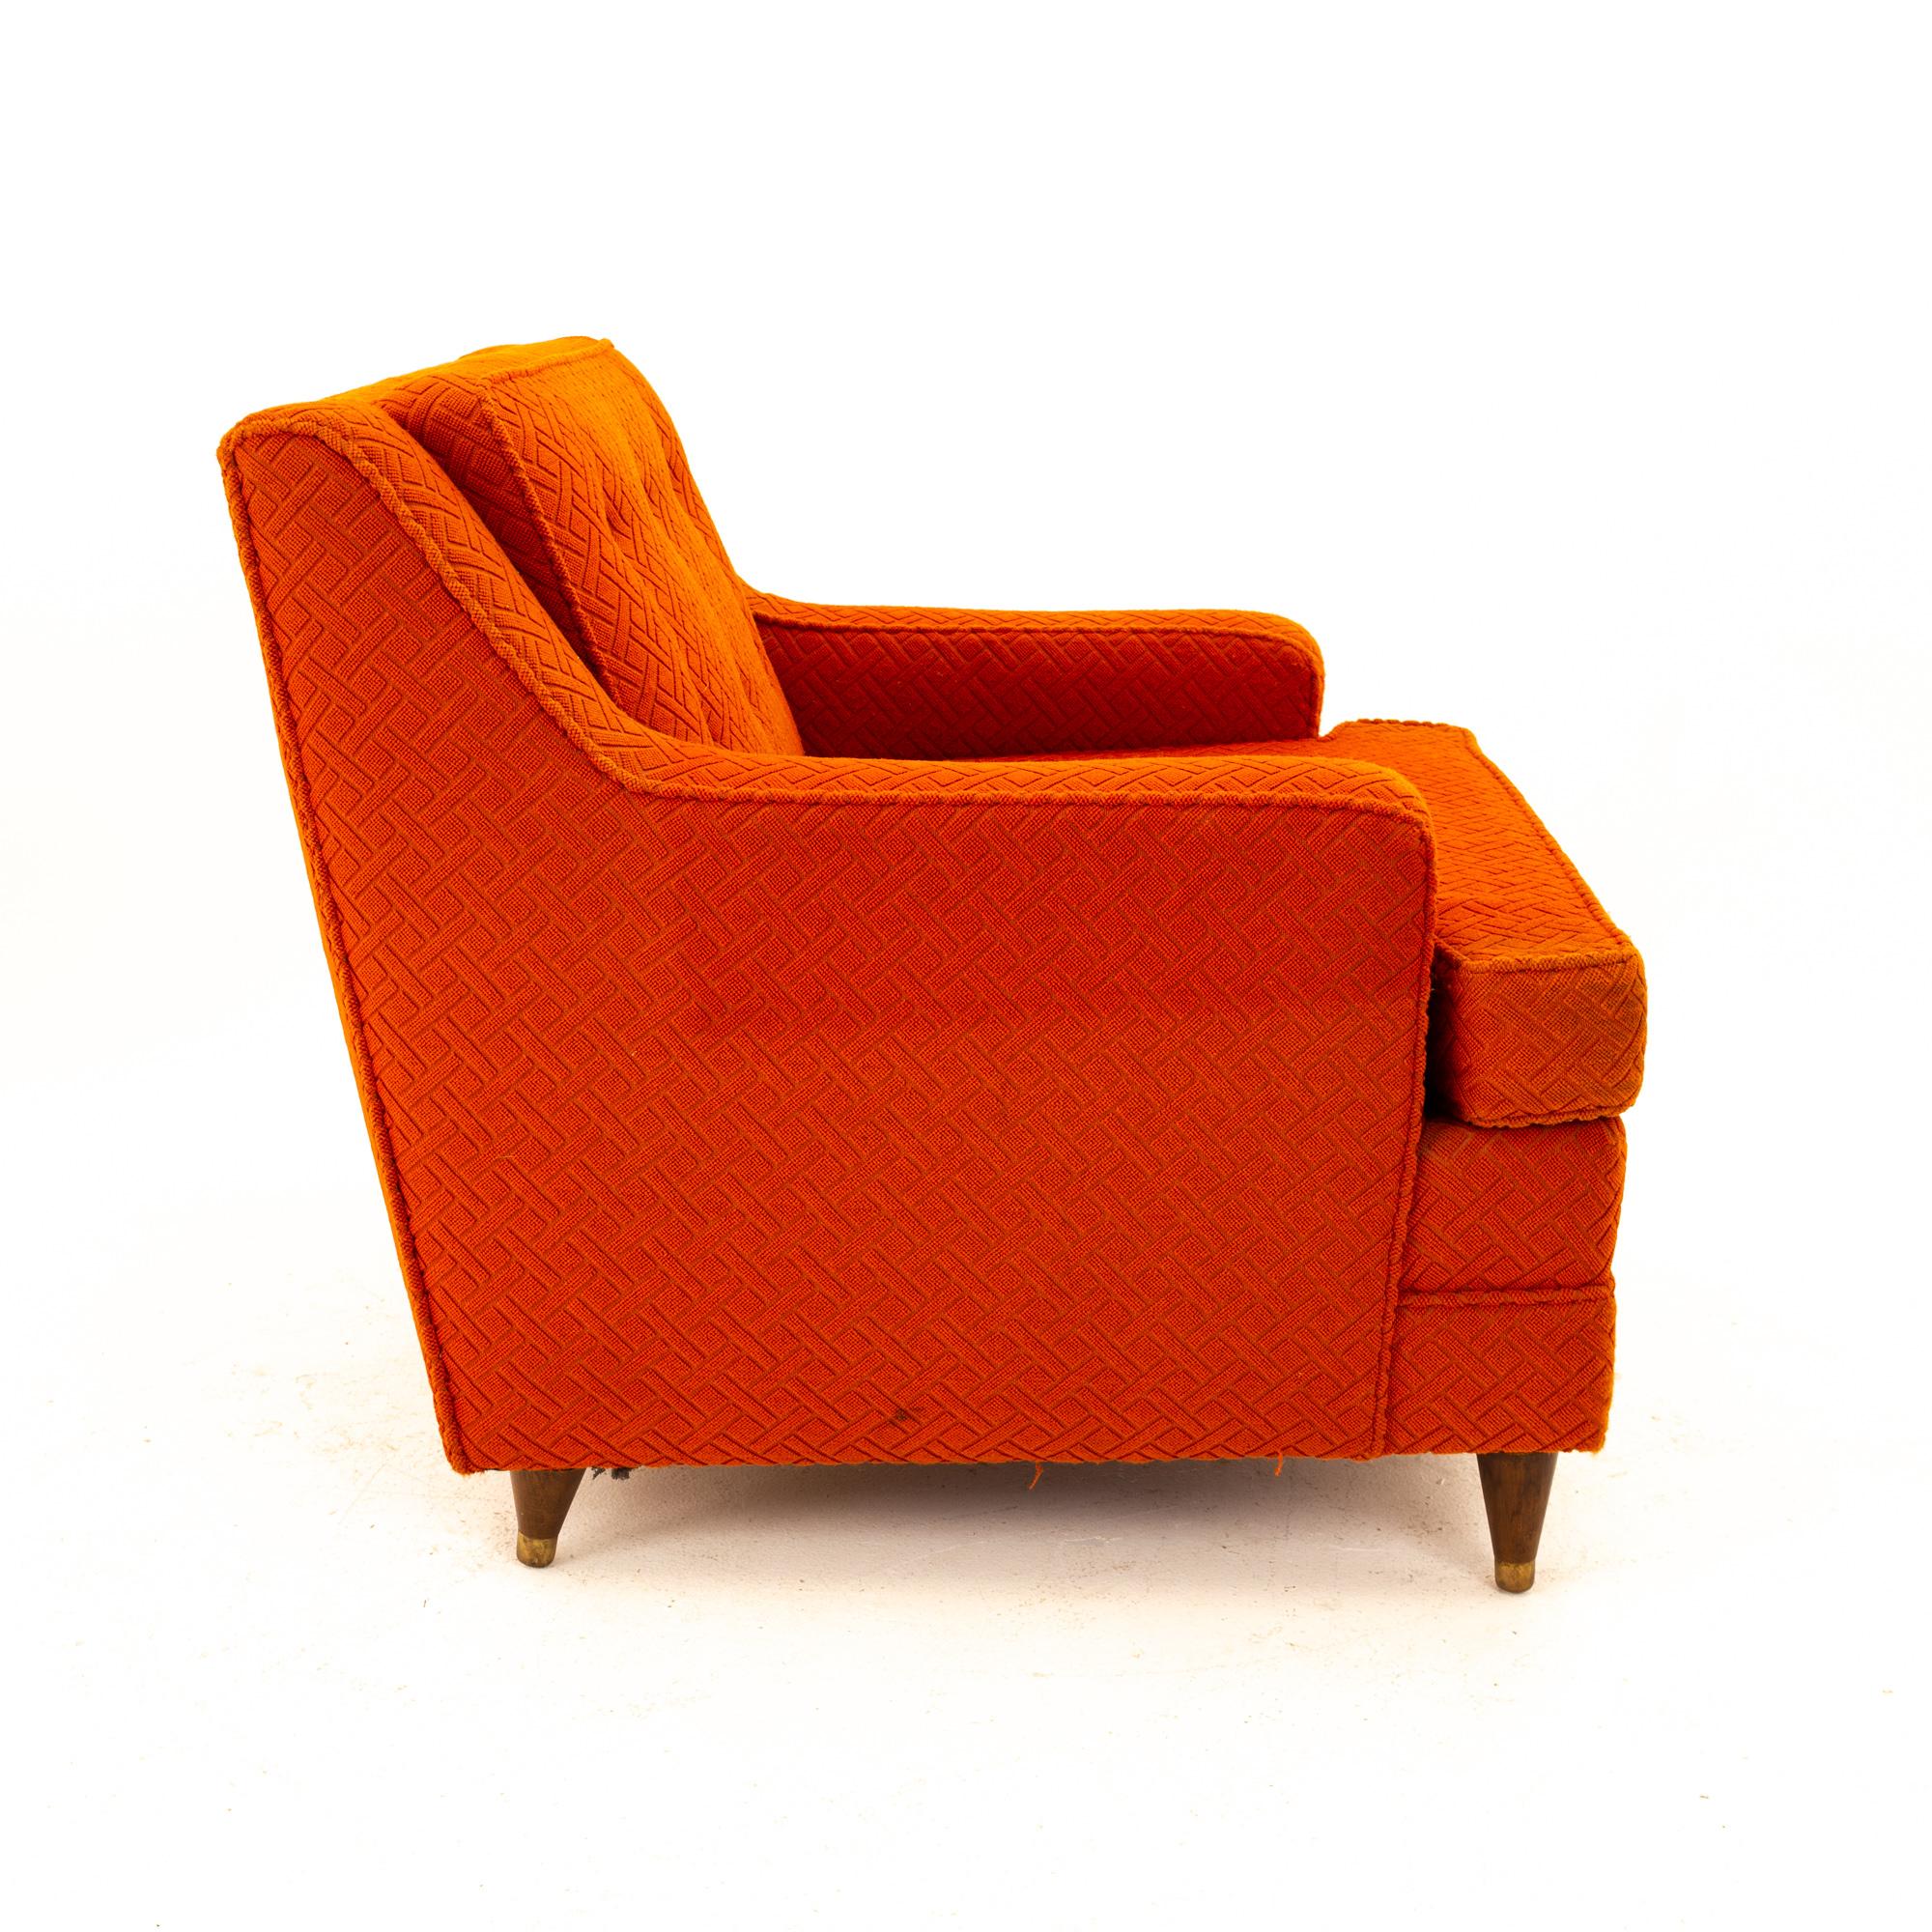 American Edward Wormley for Dunbar Style Mid Century Arm Chair